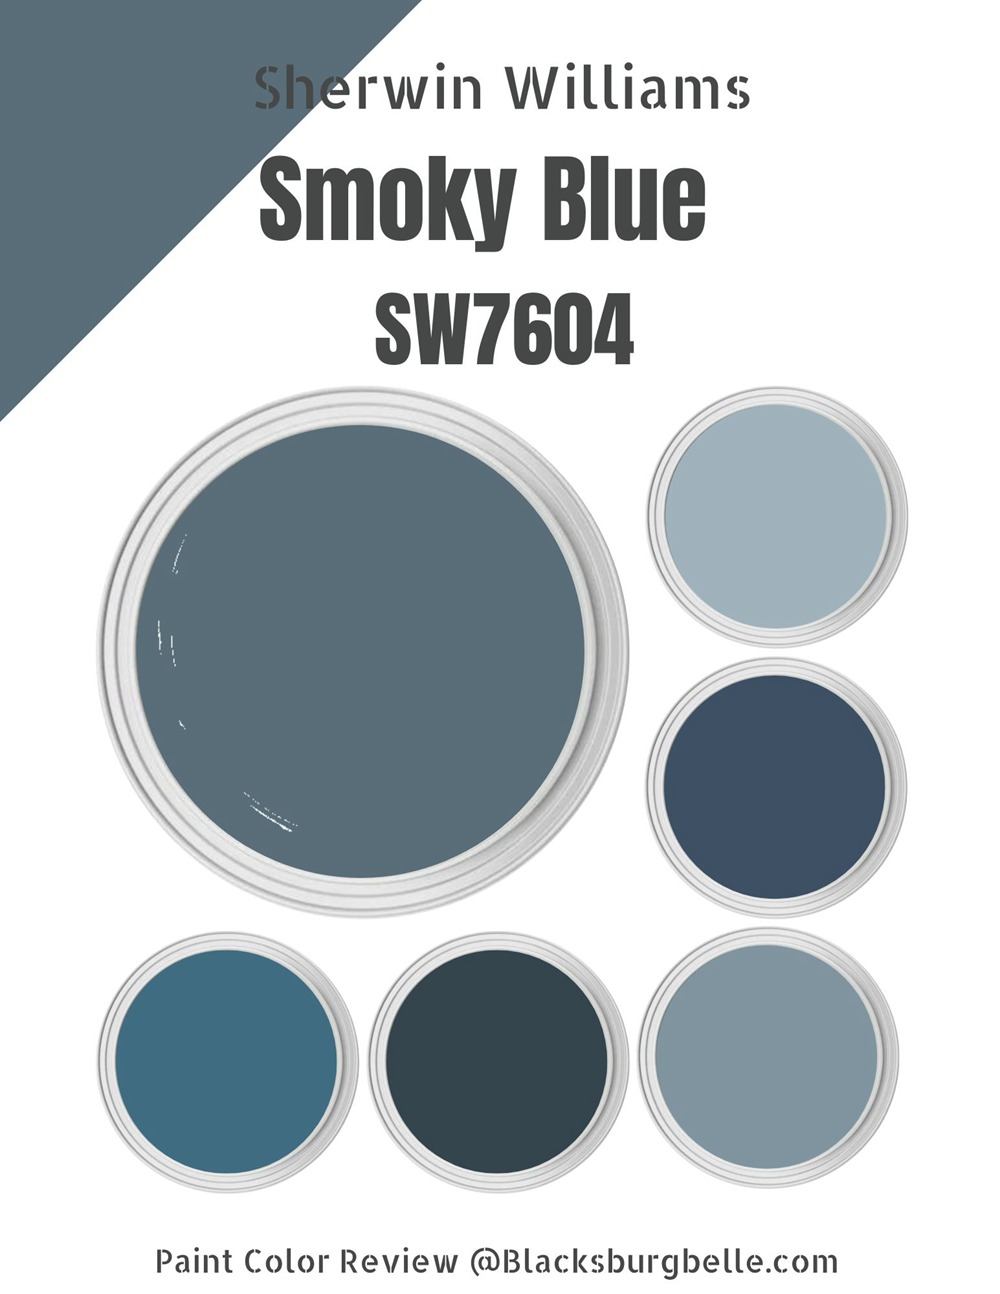 SMOKY BLUE